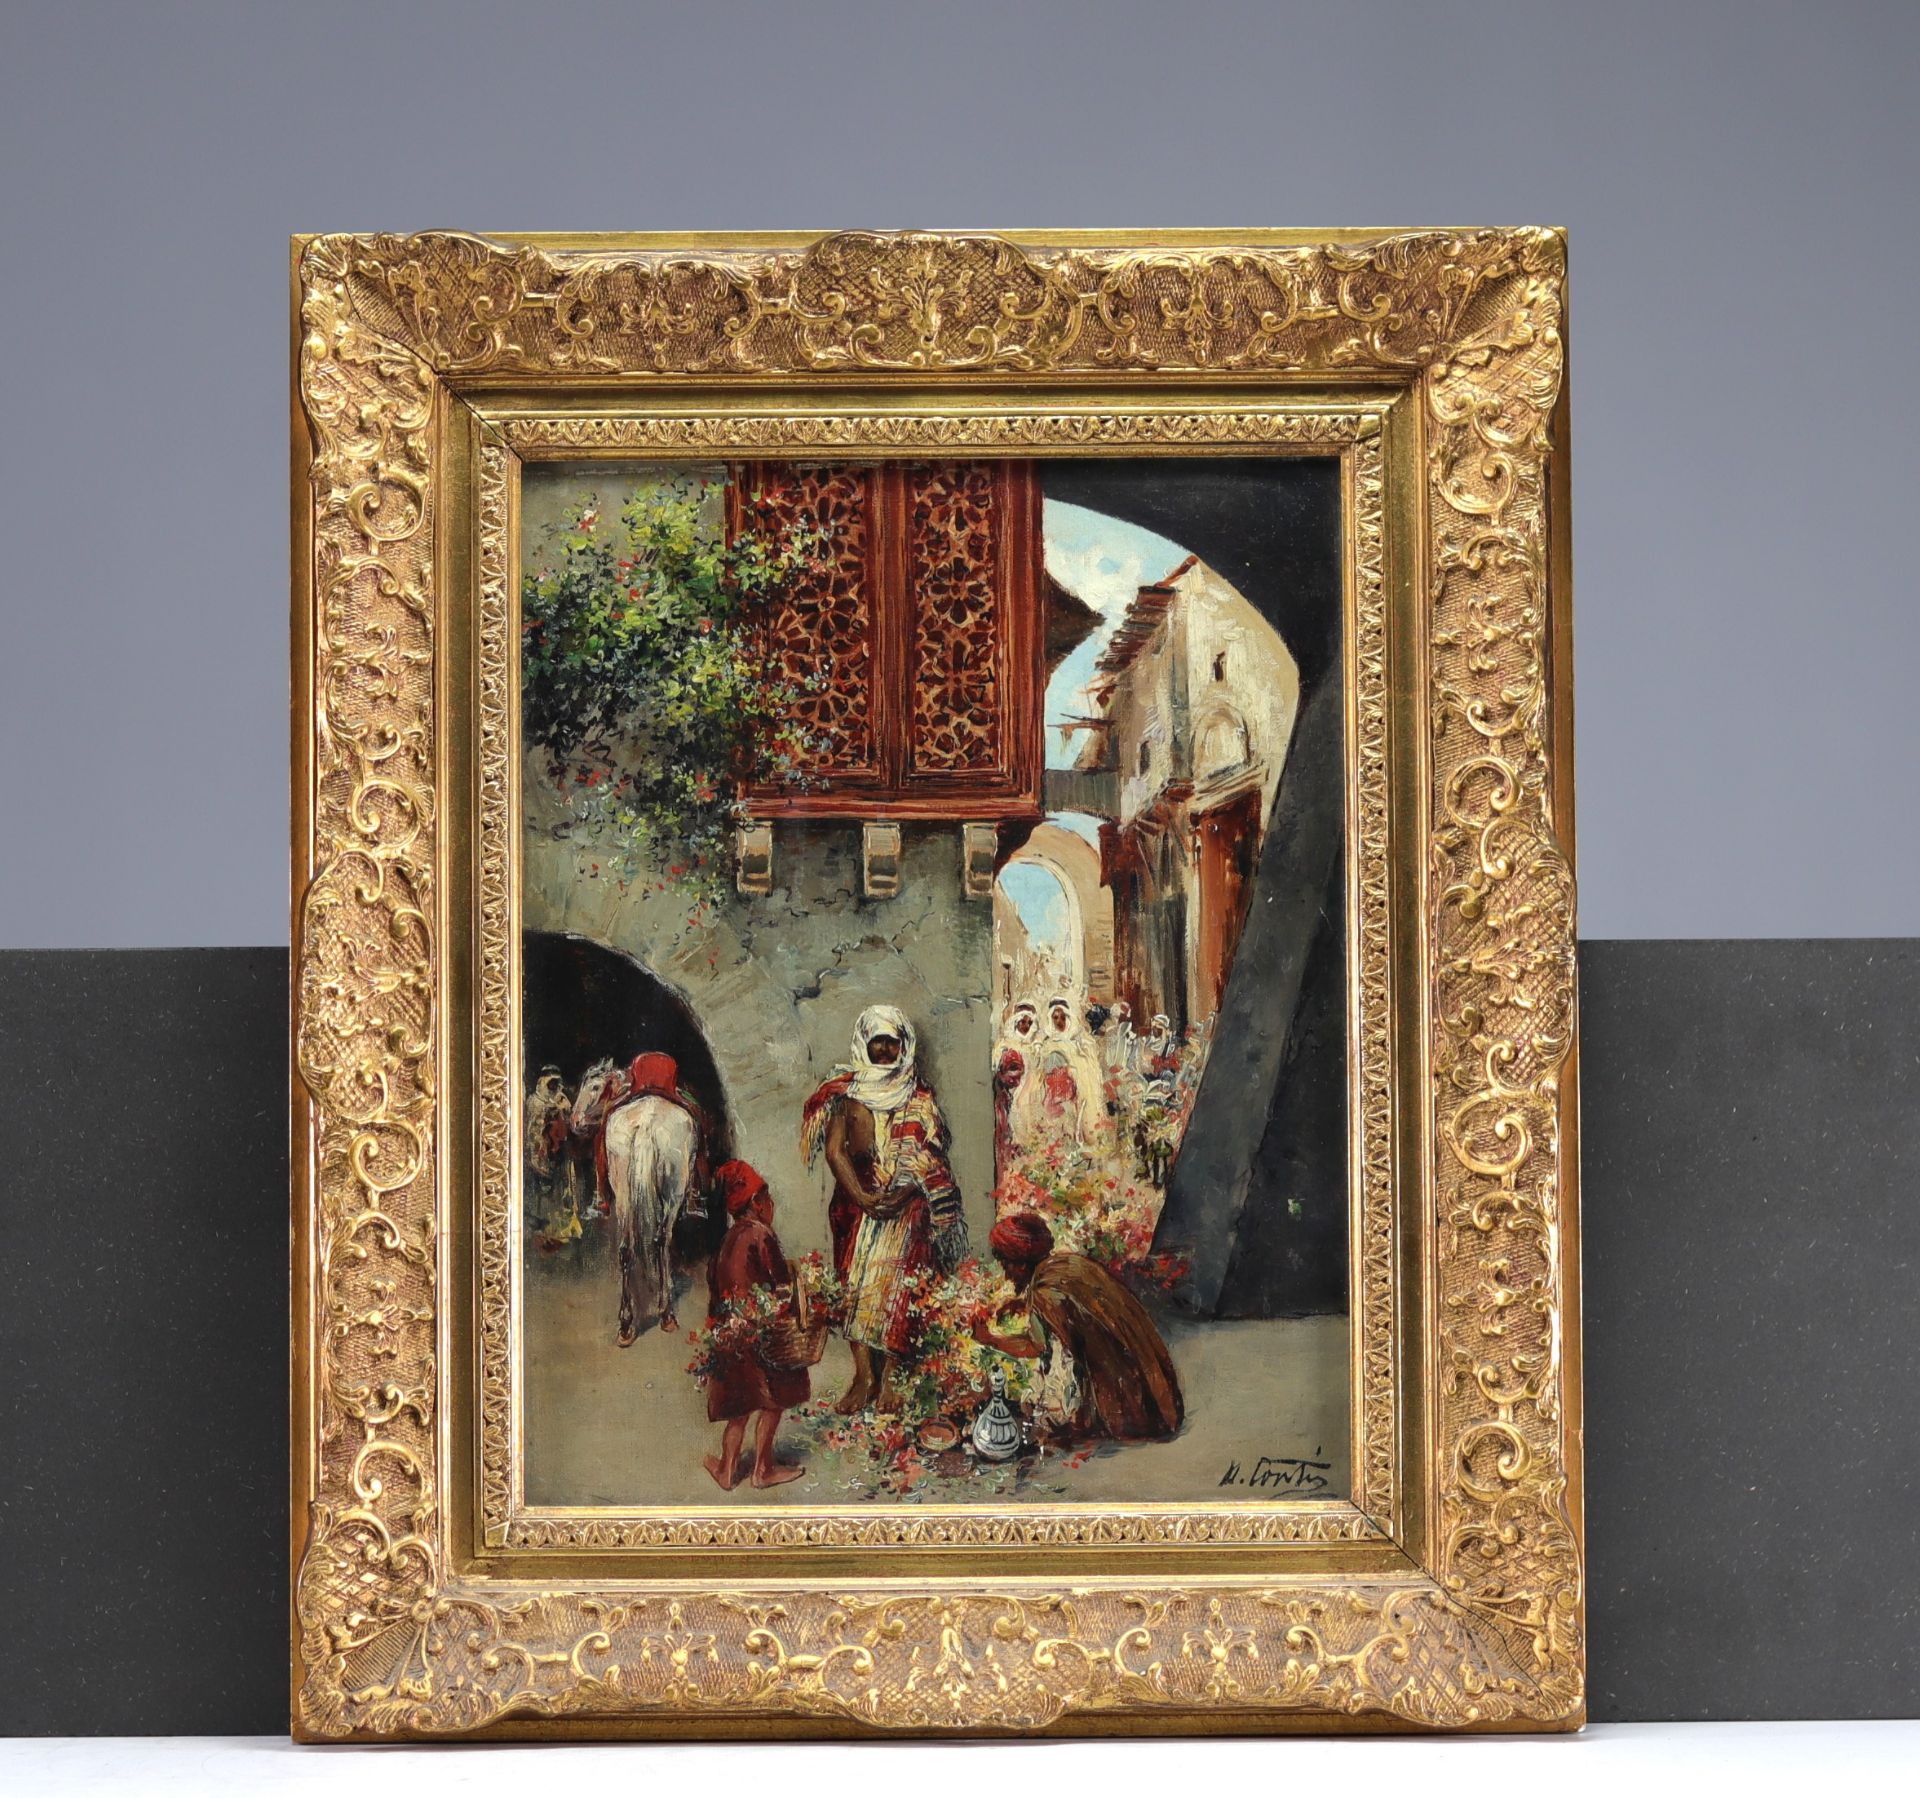 Aldo CONTI - "Flower market in the medina" Oil on canvas, 20th century. - Image 2 of 3